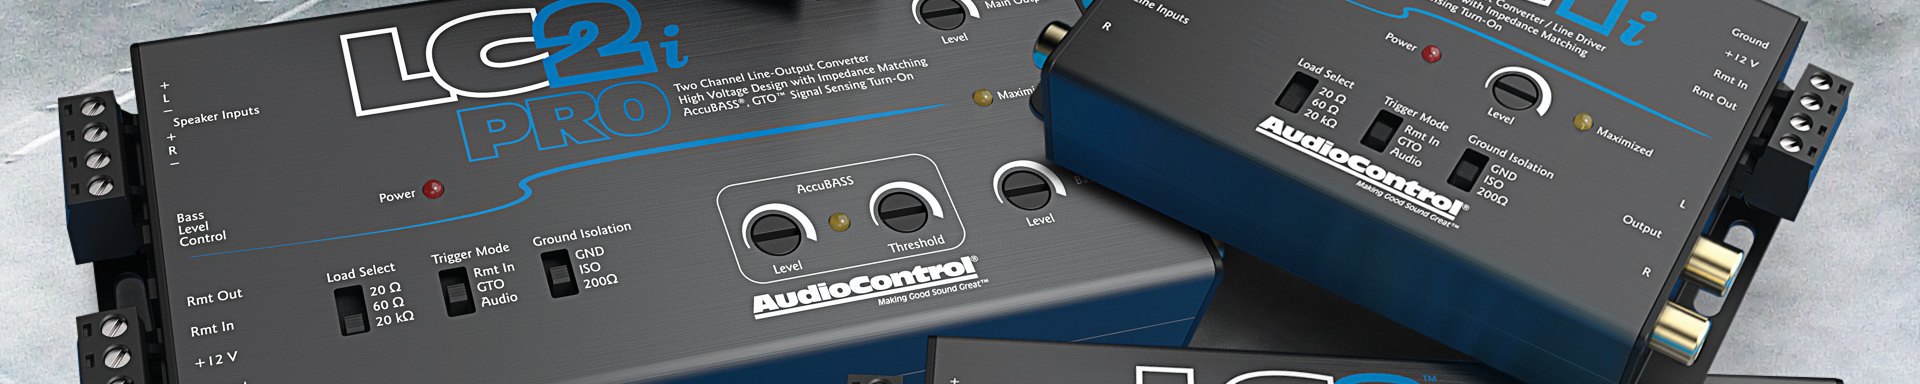 Audio Control CB Radios & Components